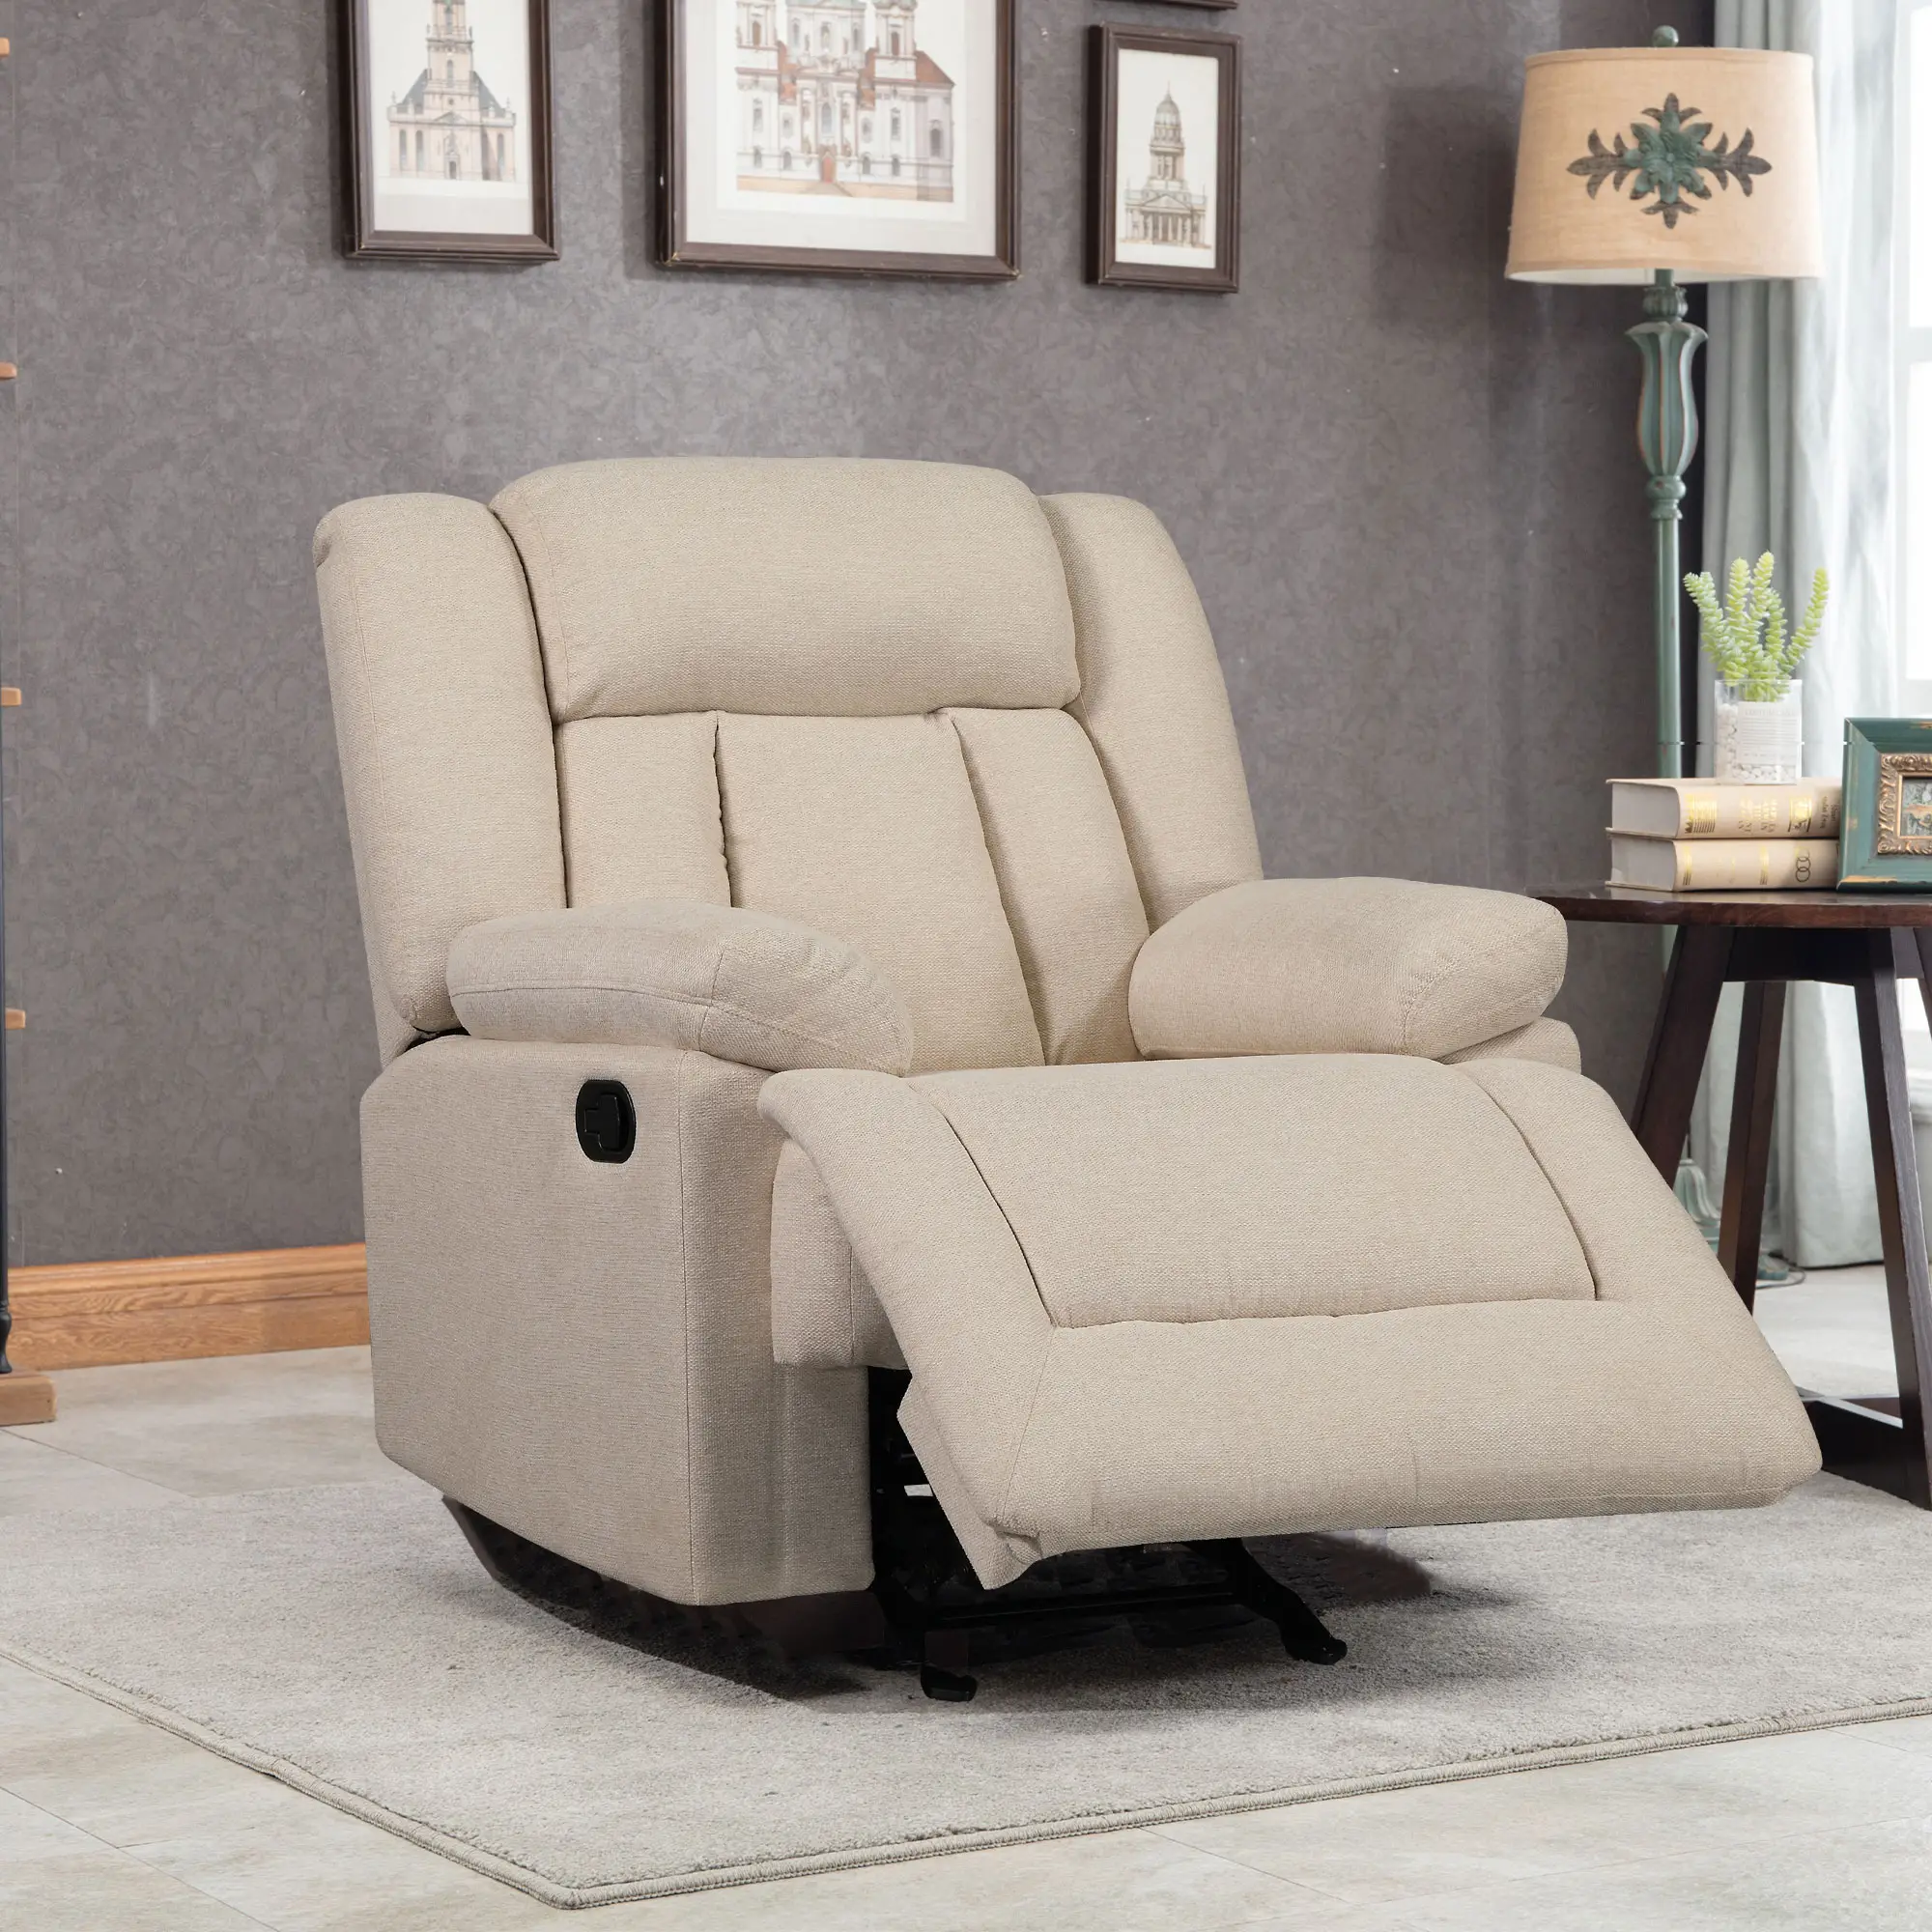 Home Cinema Morden Luxury Cheap Manual Massage Swivel Single Recliner Sofa Chair Reclining